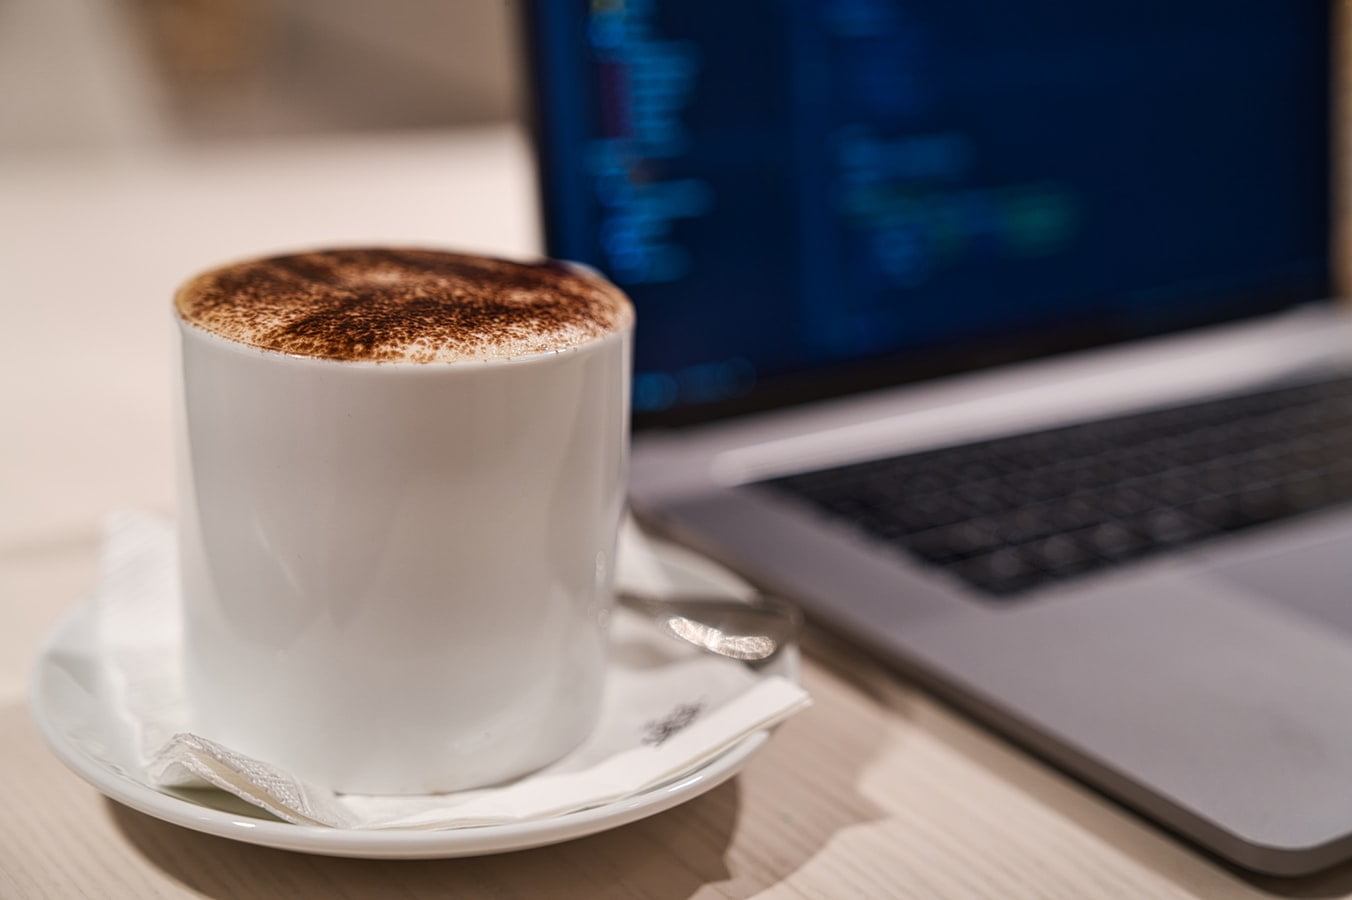 Coffee next to a laptop